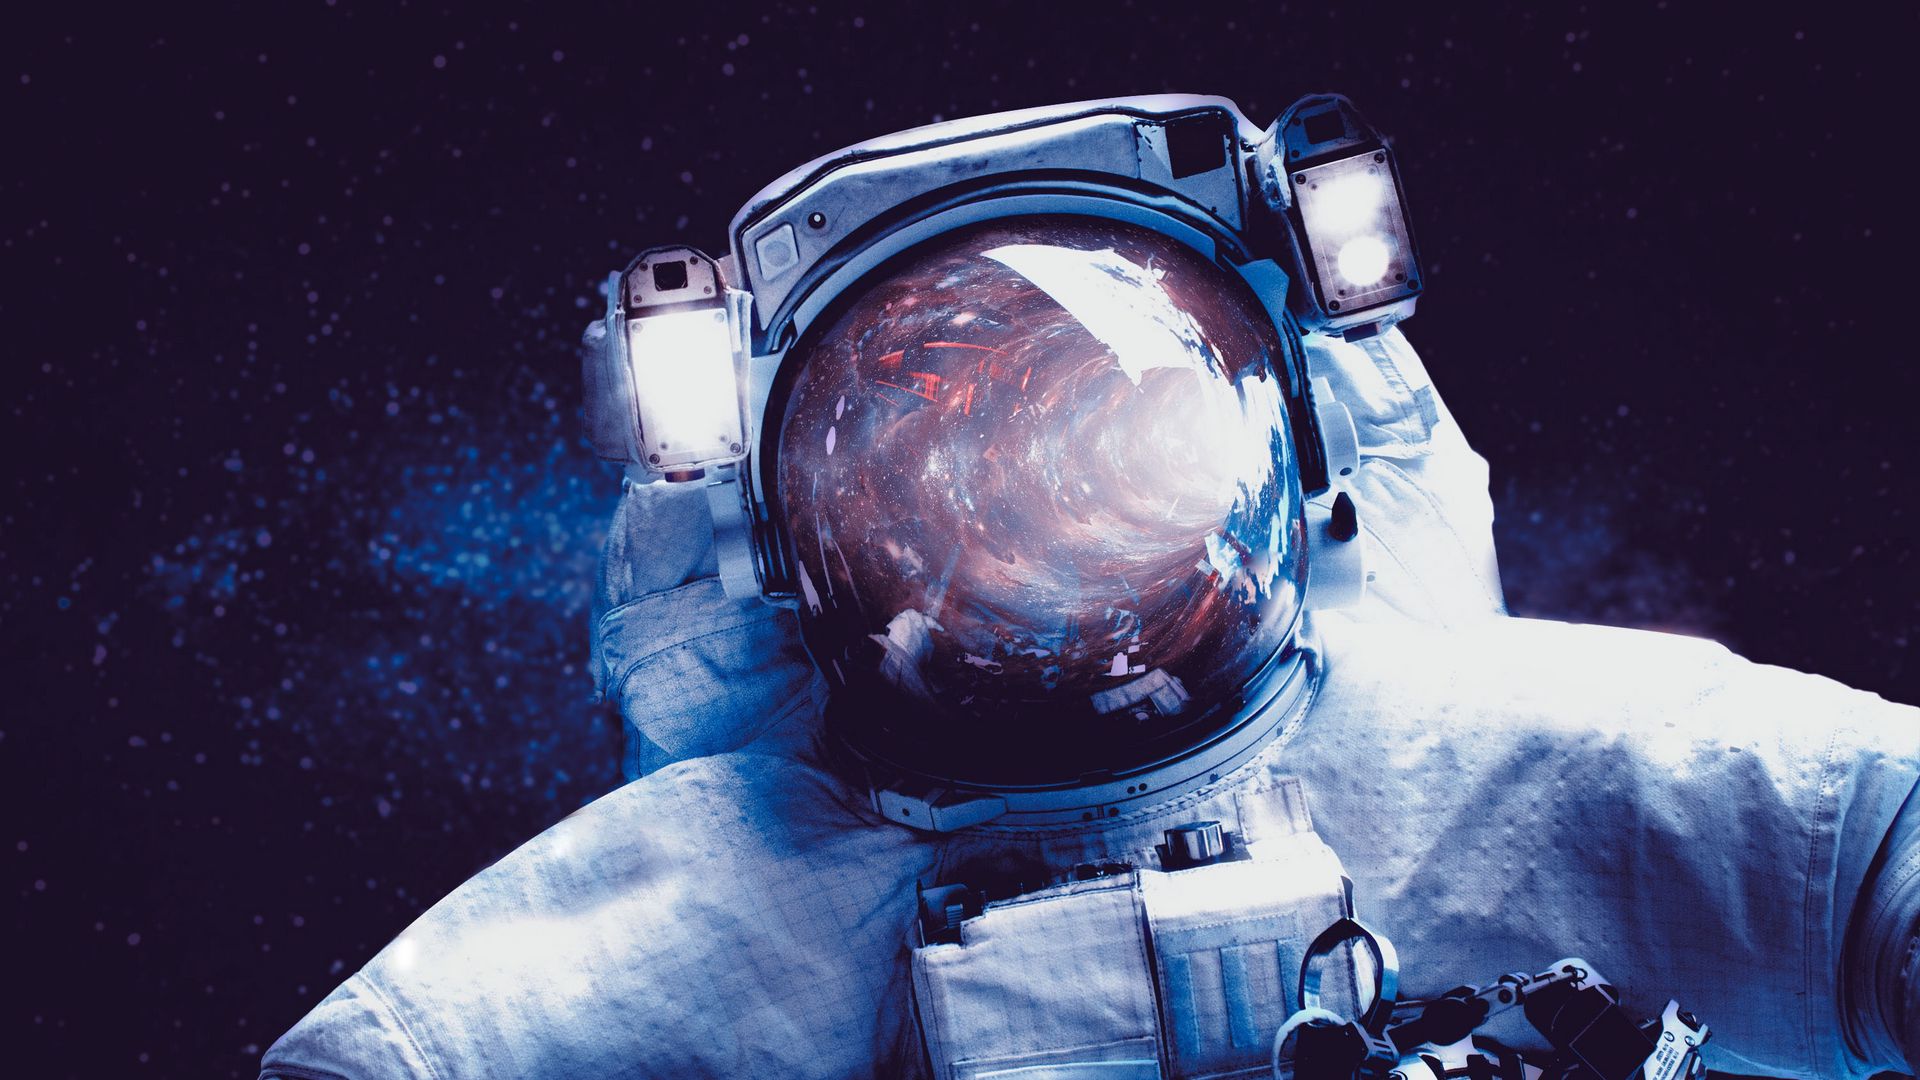 Download wallpaper 1920x1080 astronaut space suit spaceman full 1920x1080